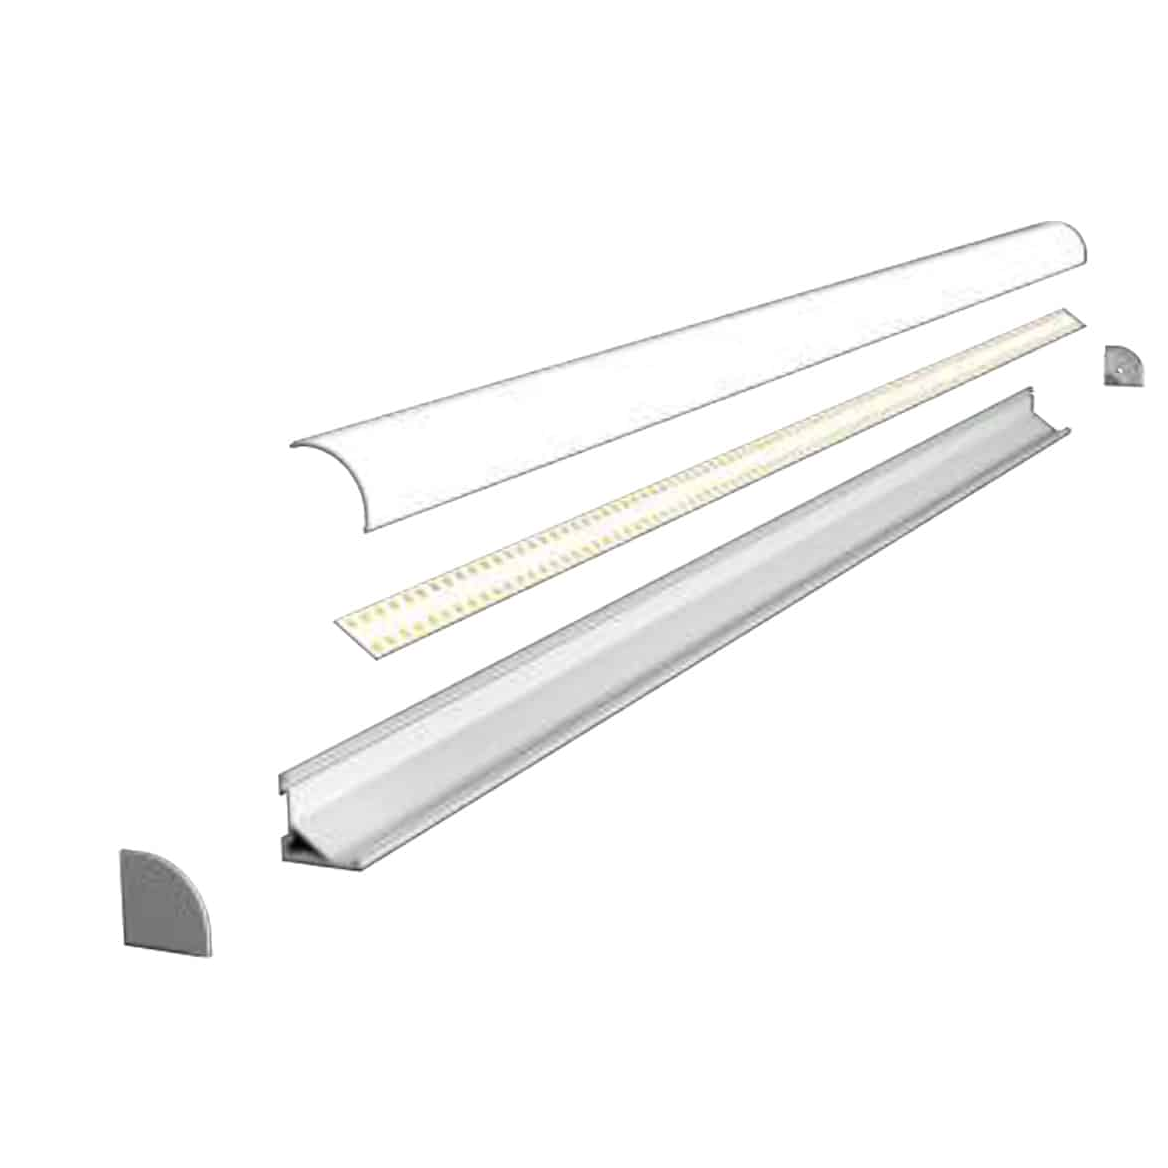 Extrusion aluminium profile for LED light